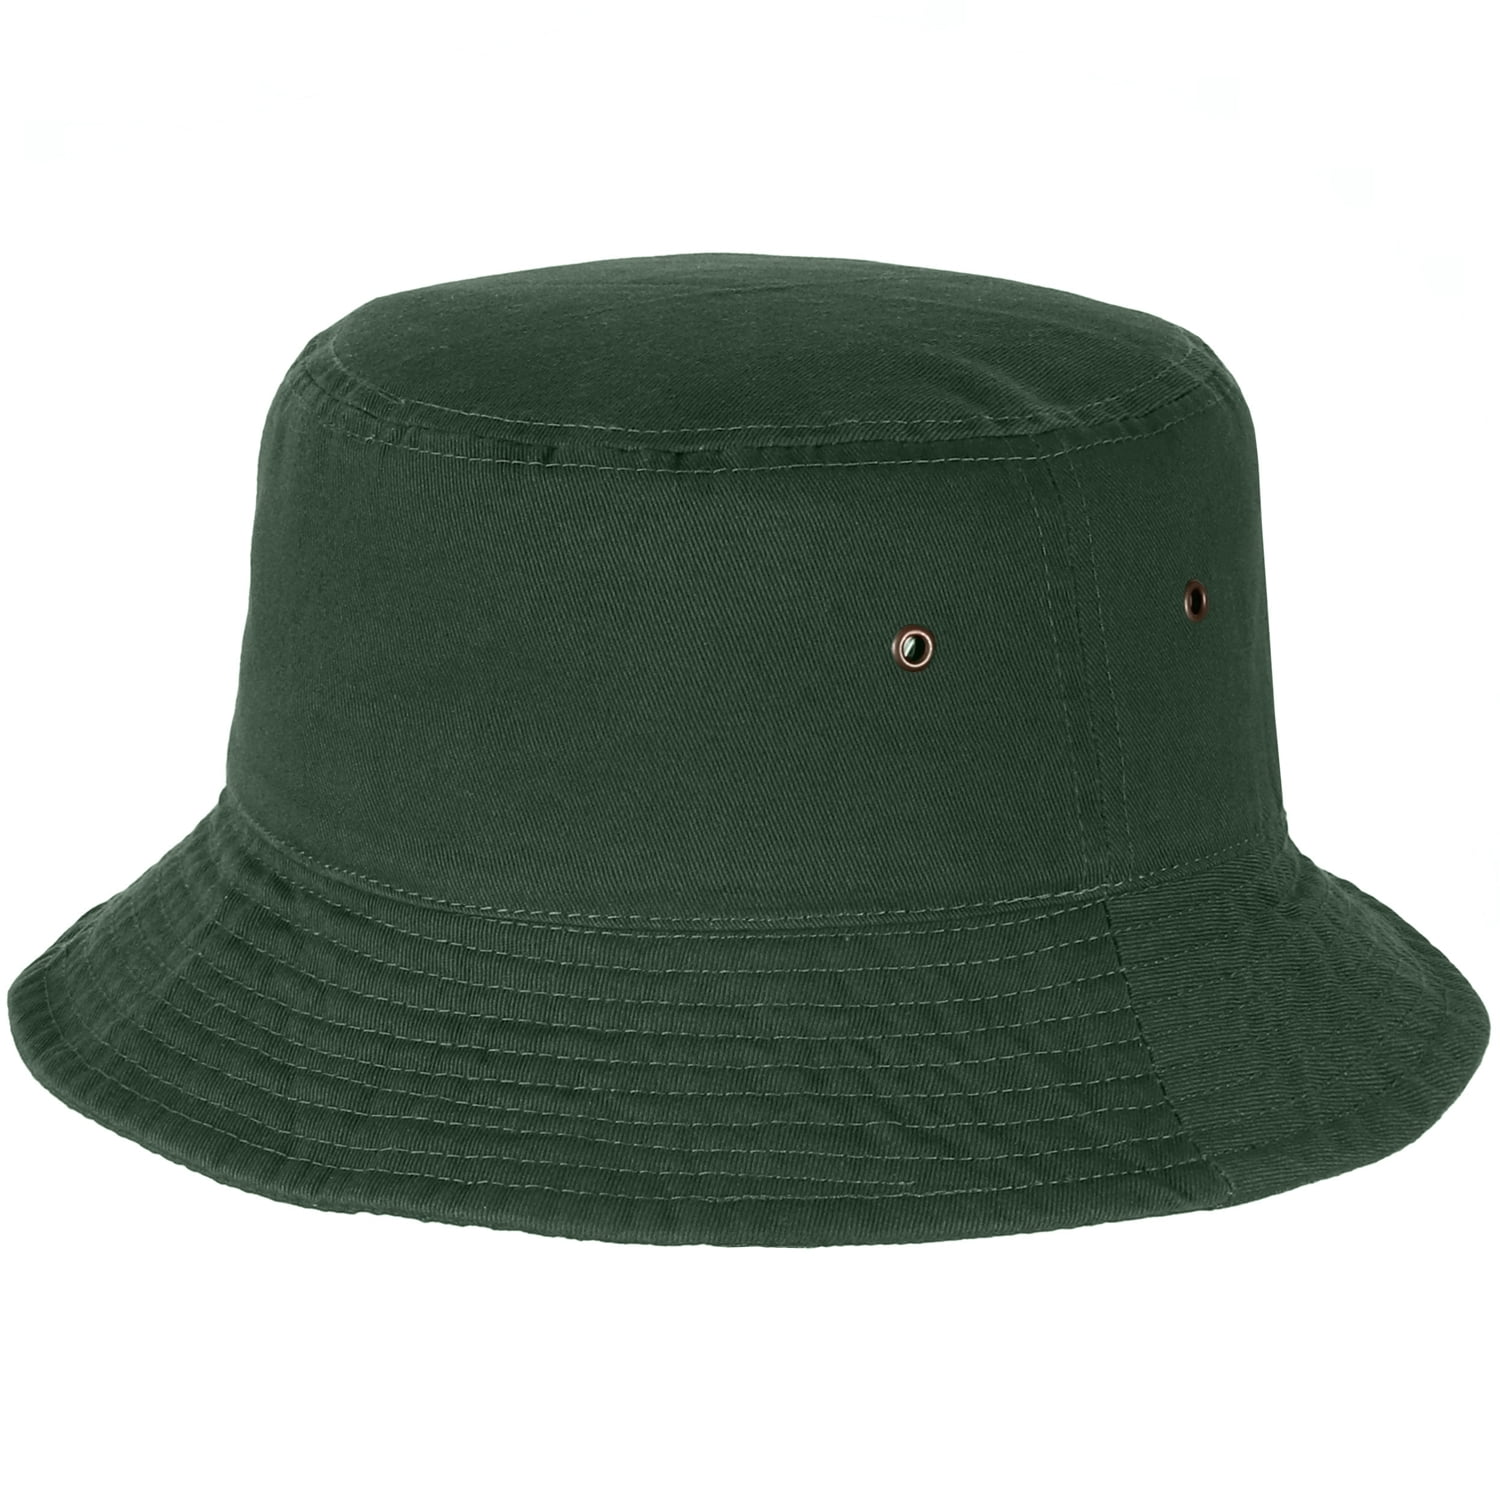 Bucket Hat for Men Women Unisex 100% Cotton Packable Foldable Summer Travel  Beach Outdoor Fishing Hat - LXL Dark Green 